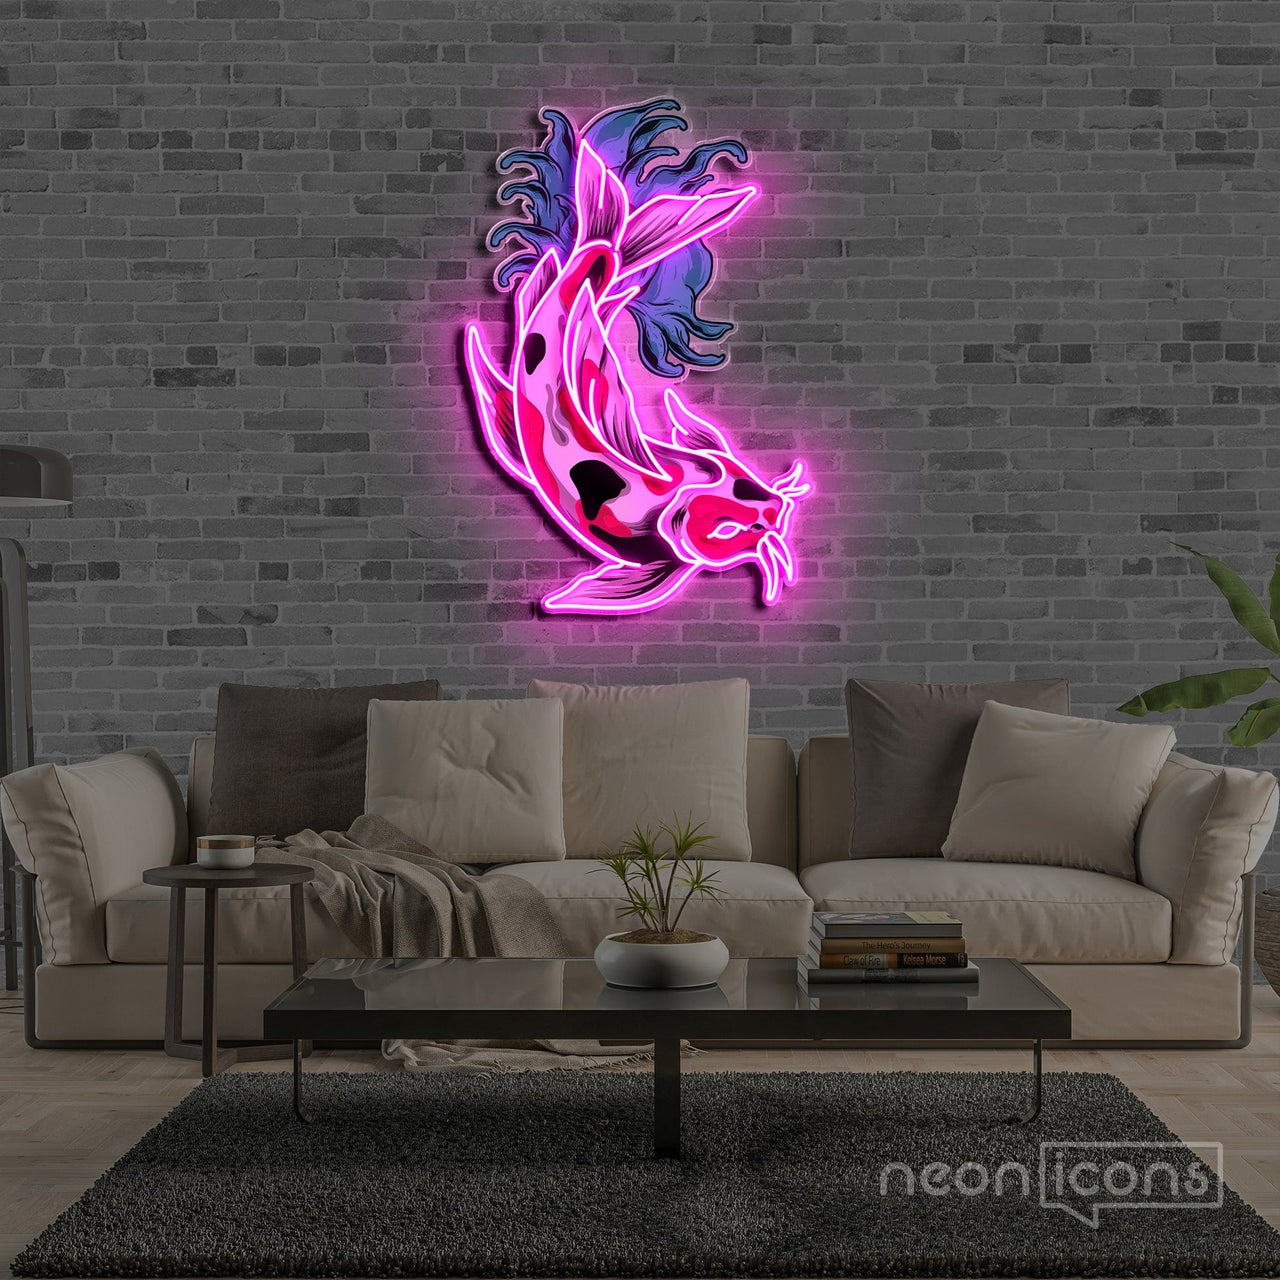 "Koi Fish" Neon x Acrylic Artwork by Neon Icons